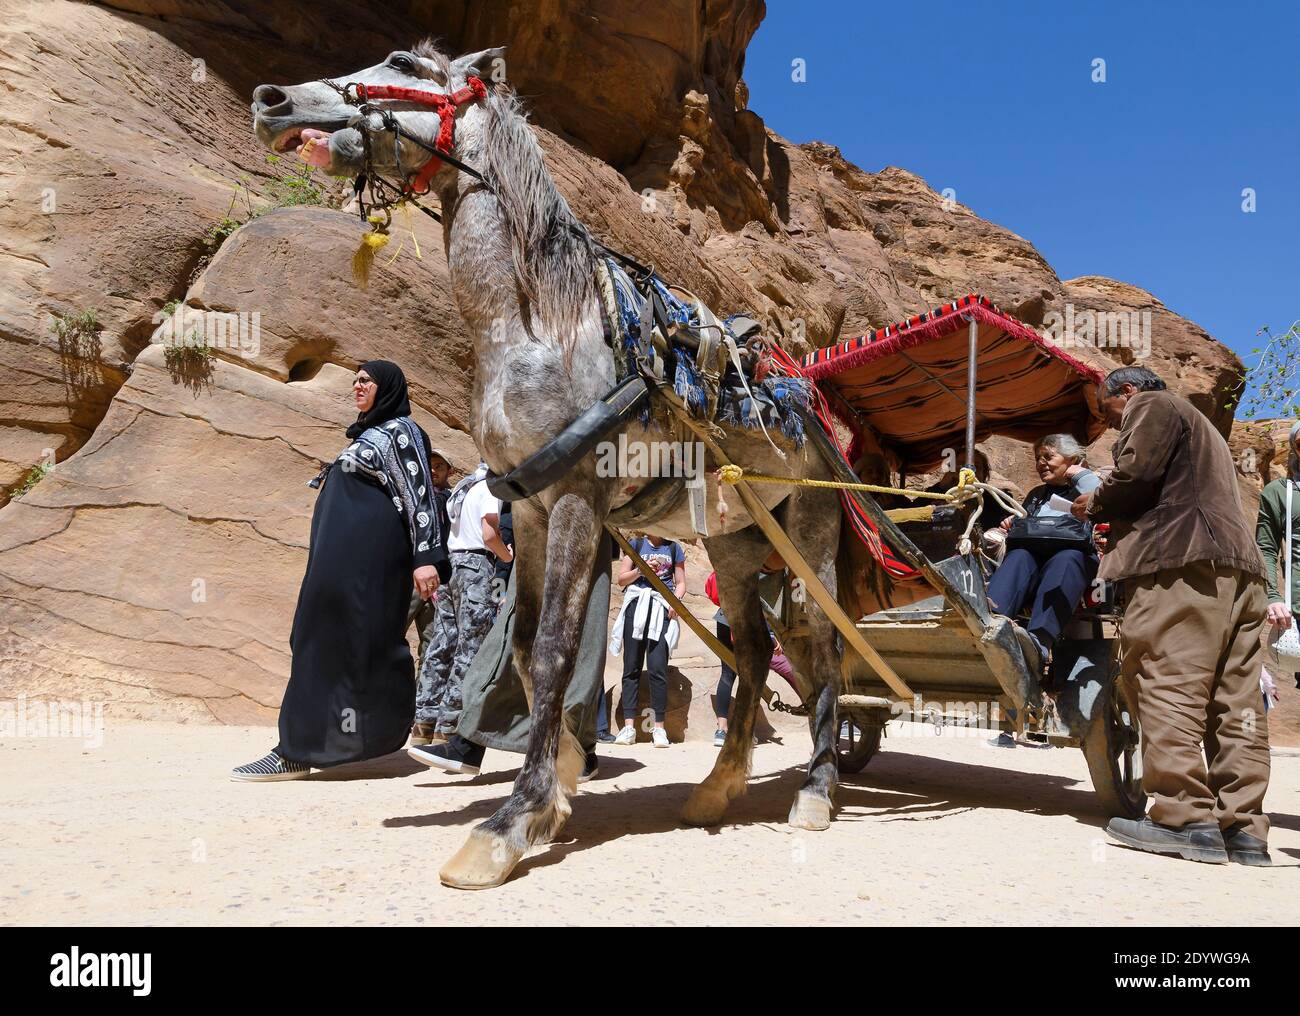 Carruaje de caballos en el Siq, entrada a Petra, Jordania. Paseos a caballo por los turistas. Foto de stock